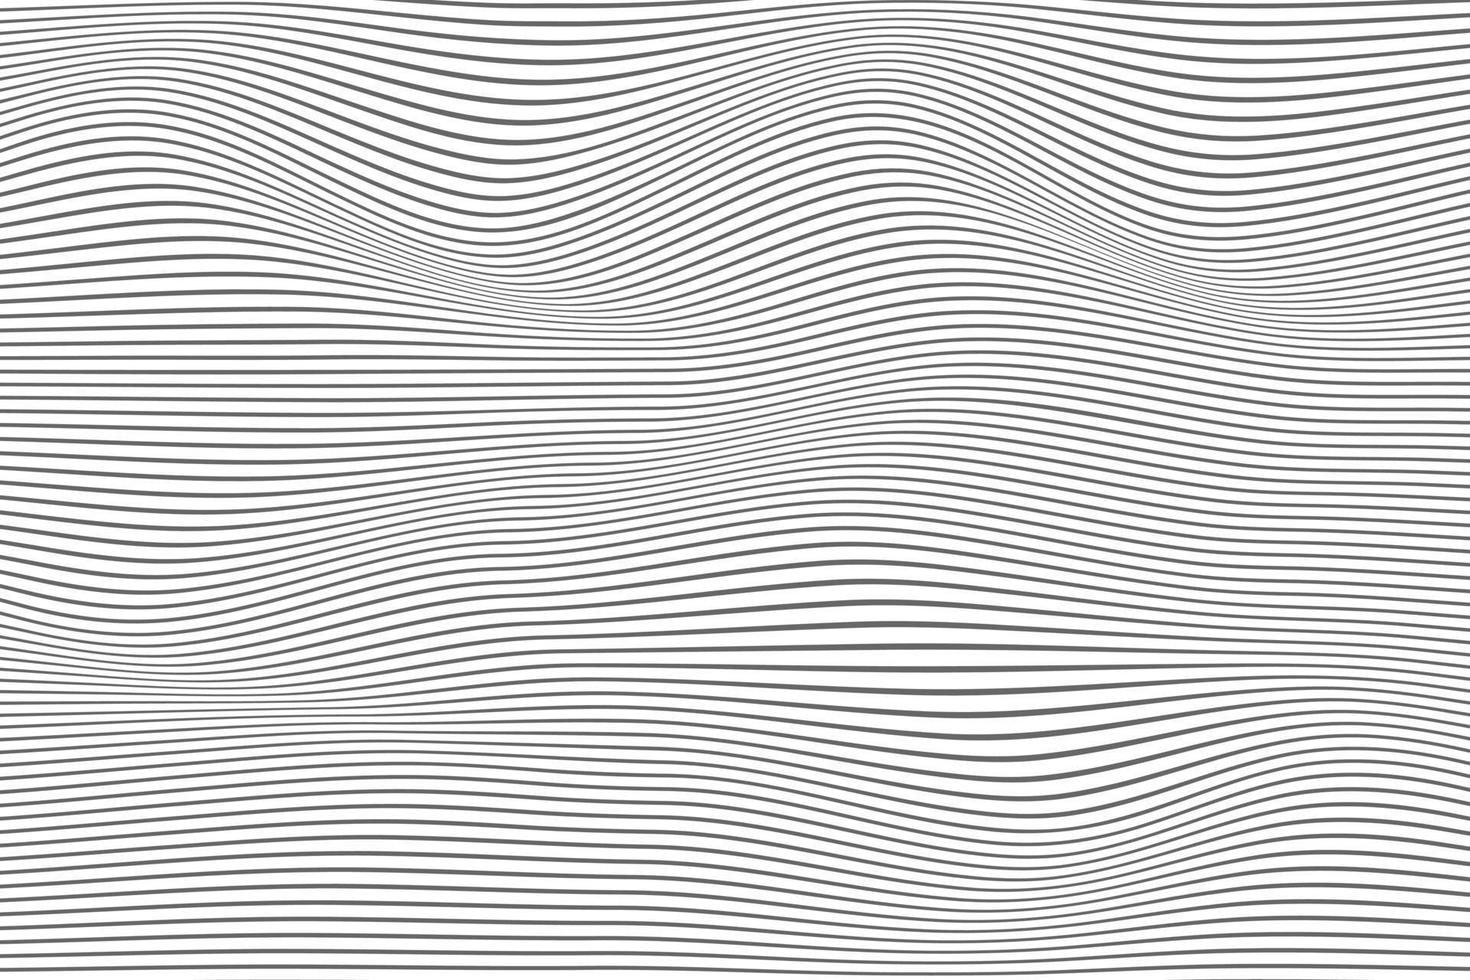 abstrakt grau diagonal Welle Linie Vektor Muster Design.